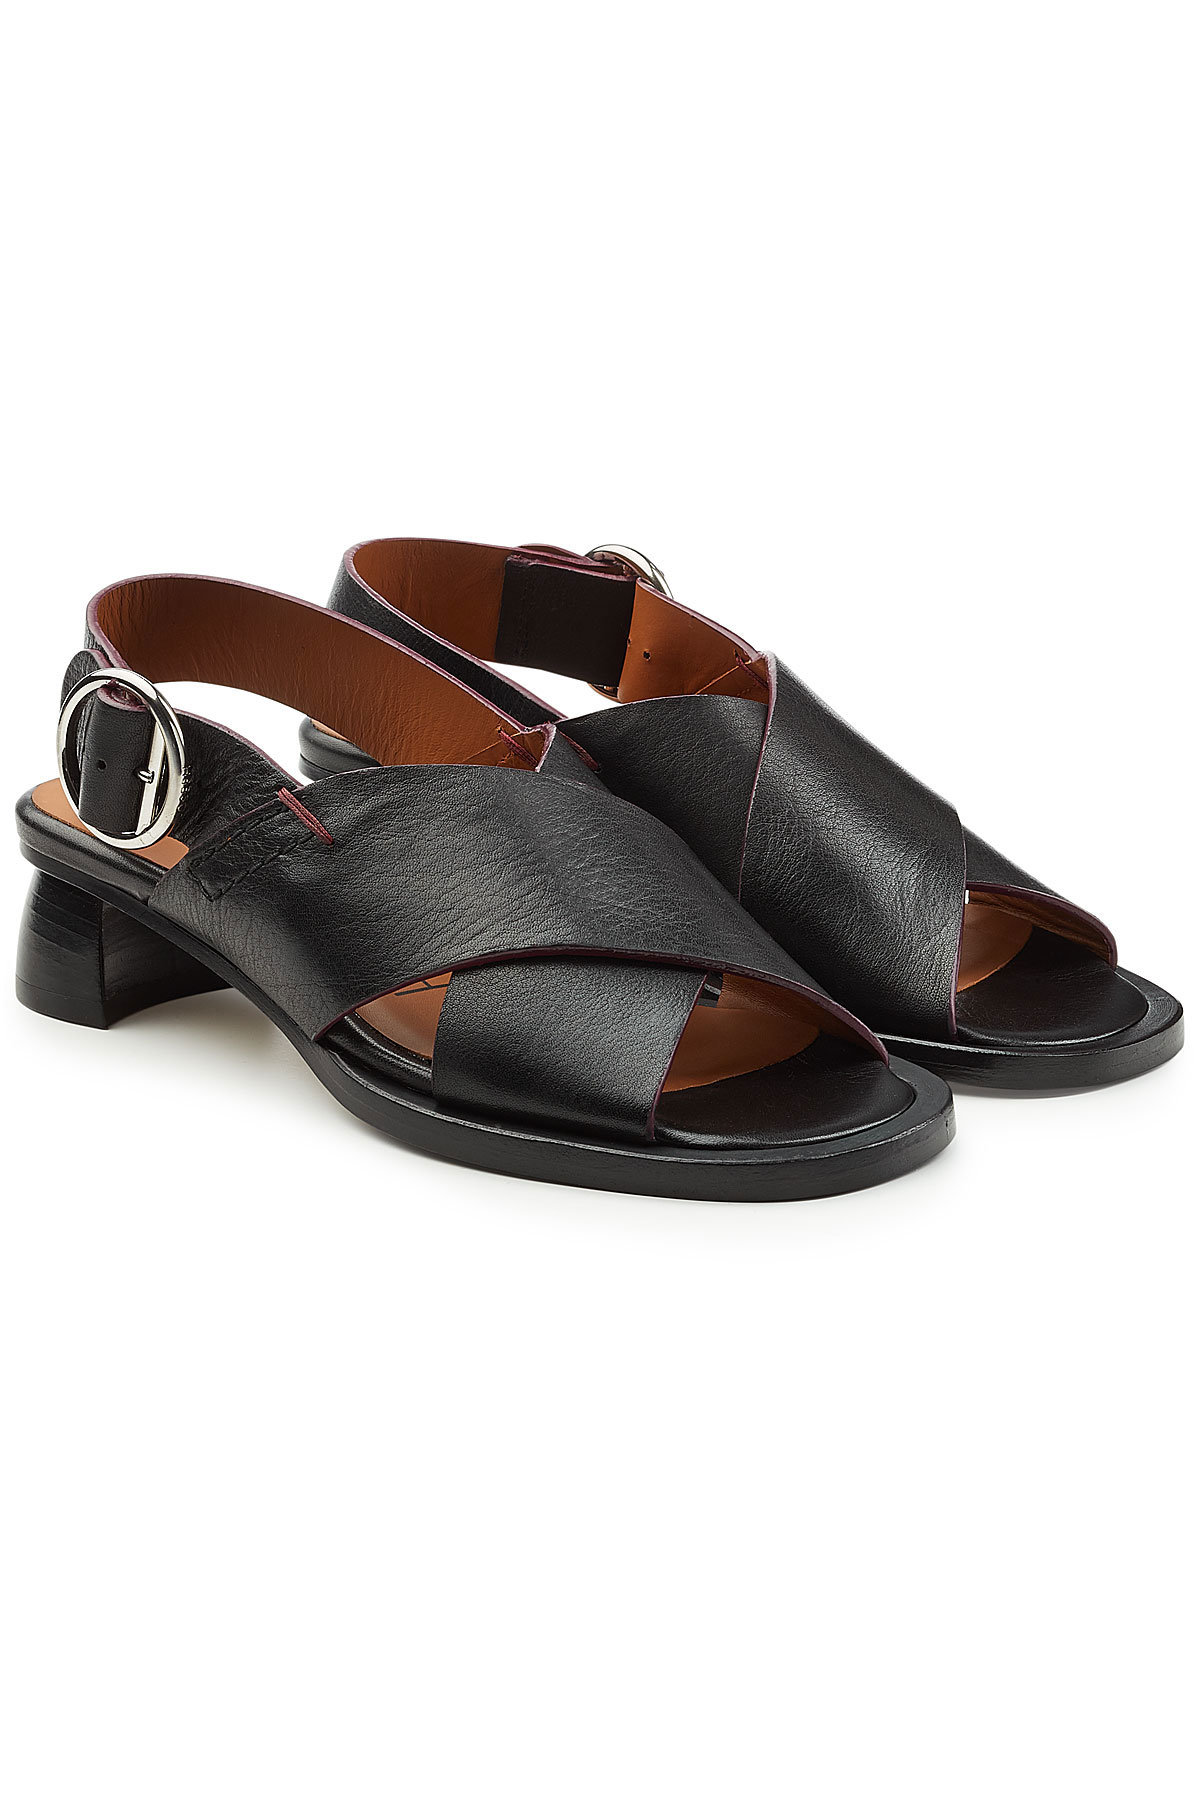 Joseph - Sirp Leather Sandals